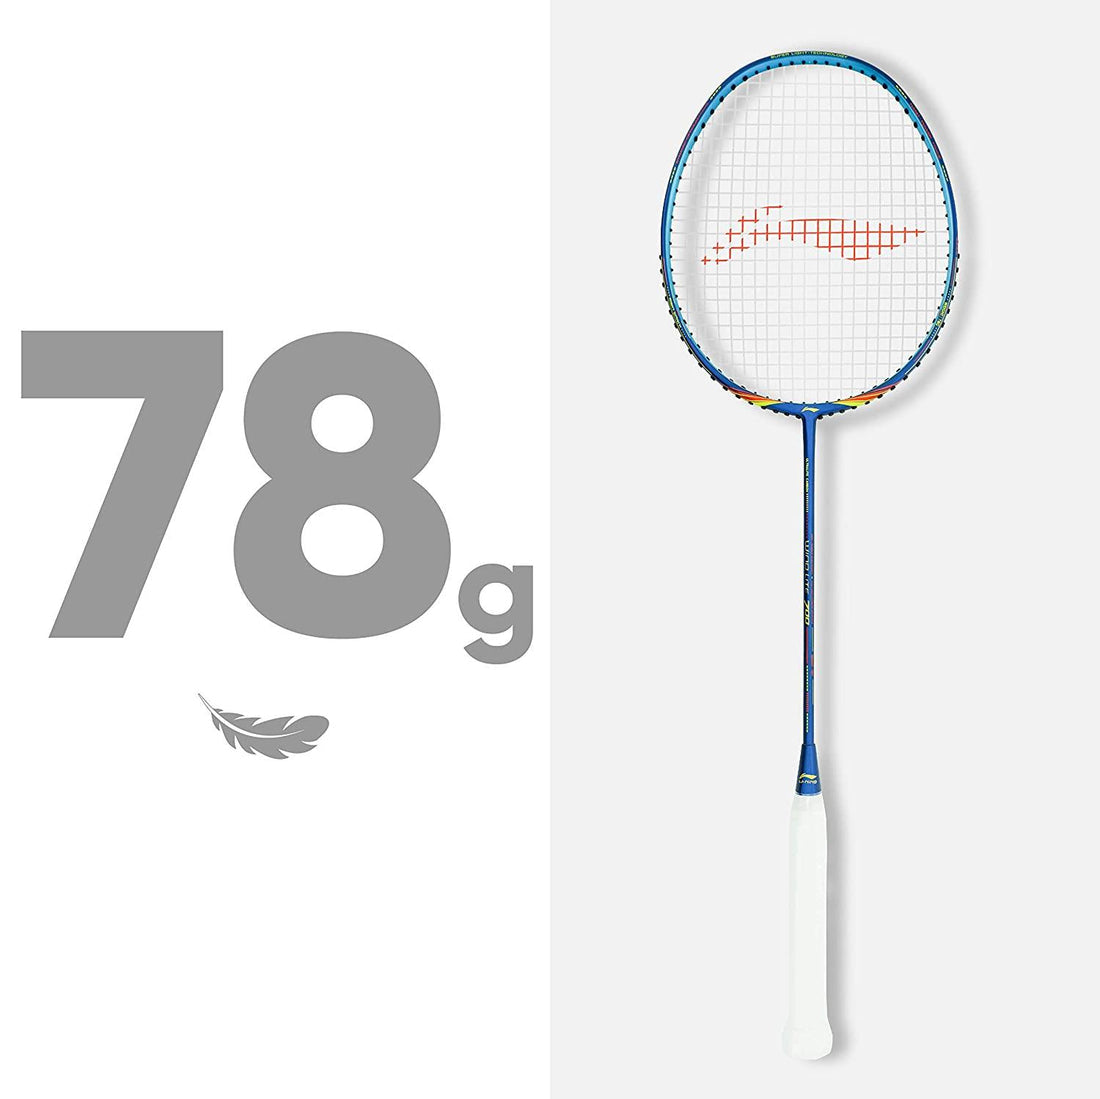 Li-Ning Wind Lite 700 Carbon Fibre Strung Badminton Racket - Best Price online Prokicksports.com